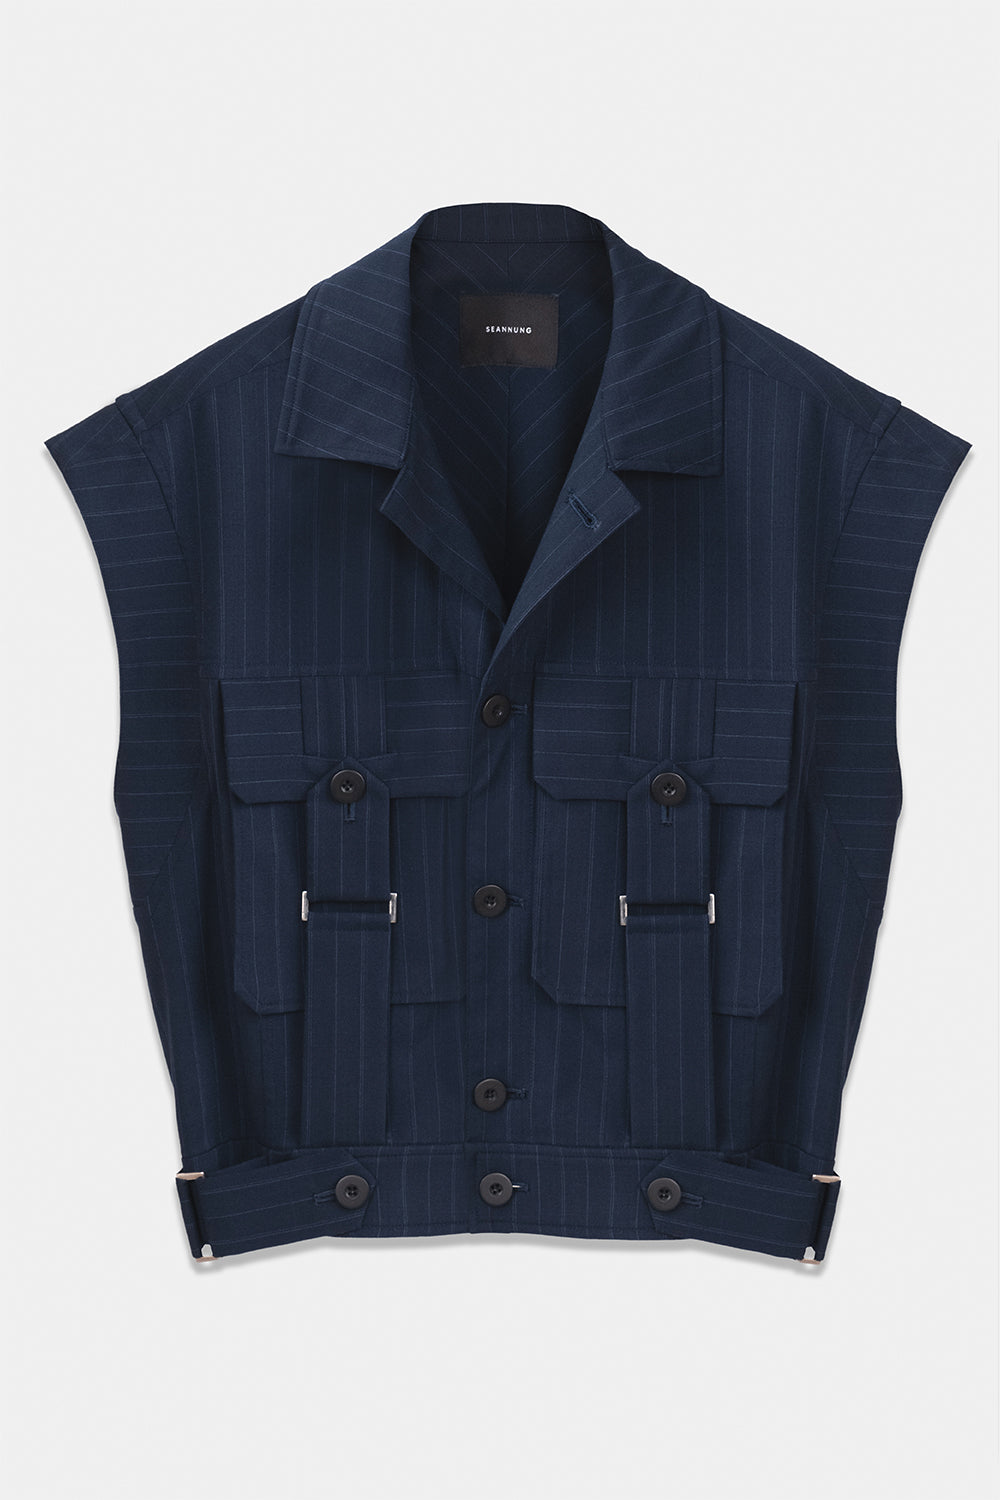 SEANNUNG - MEN - Sleeveless Belt Jacket Vest 無袖帶環外套